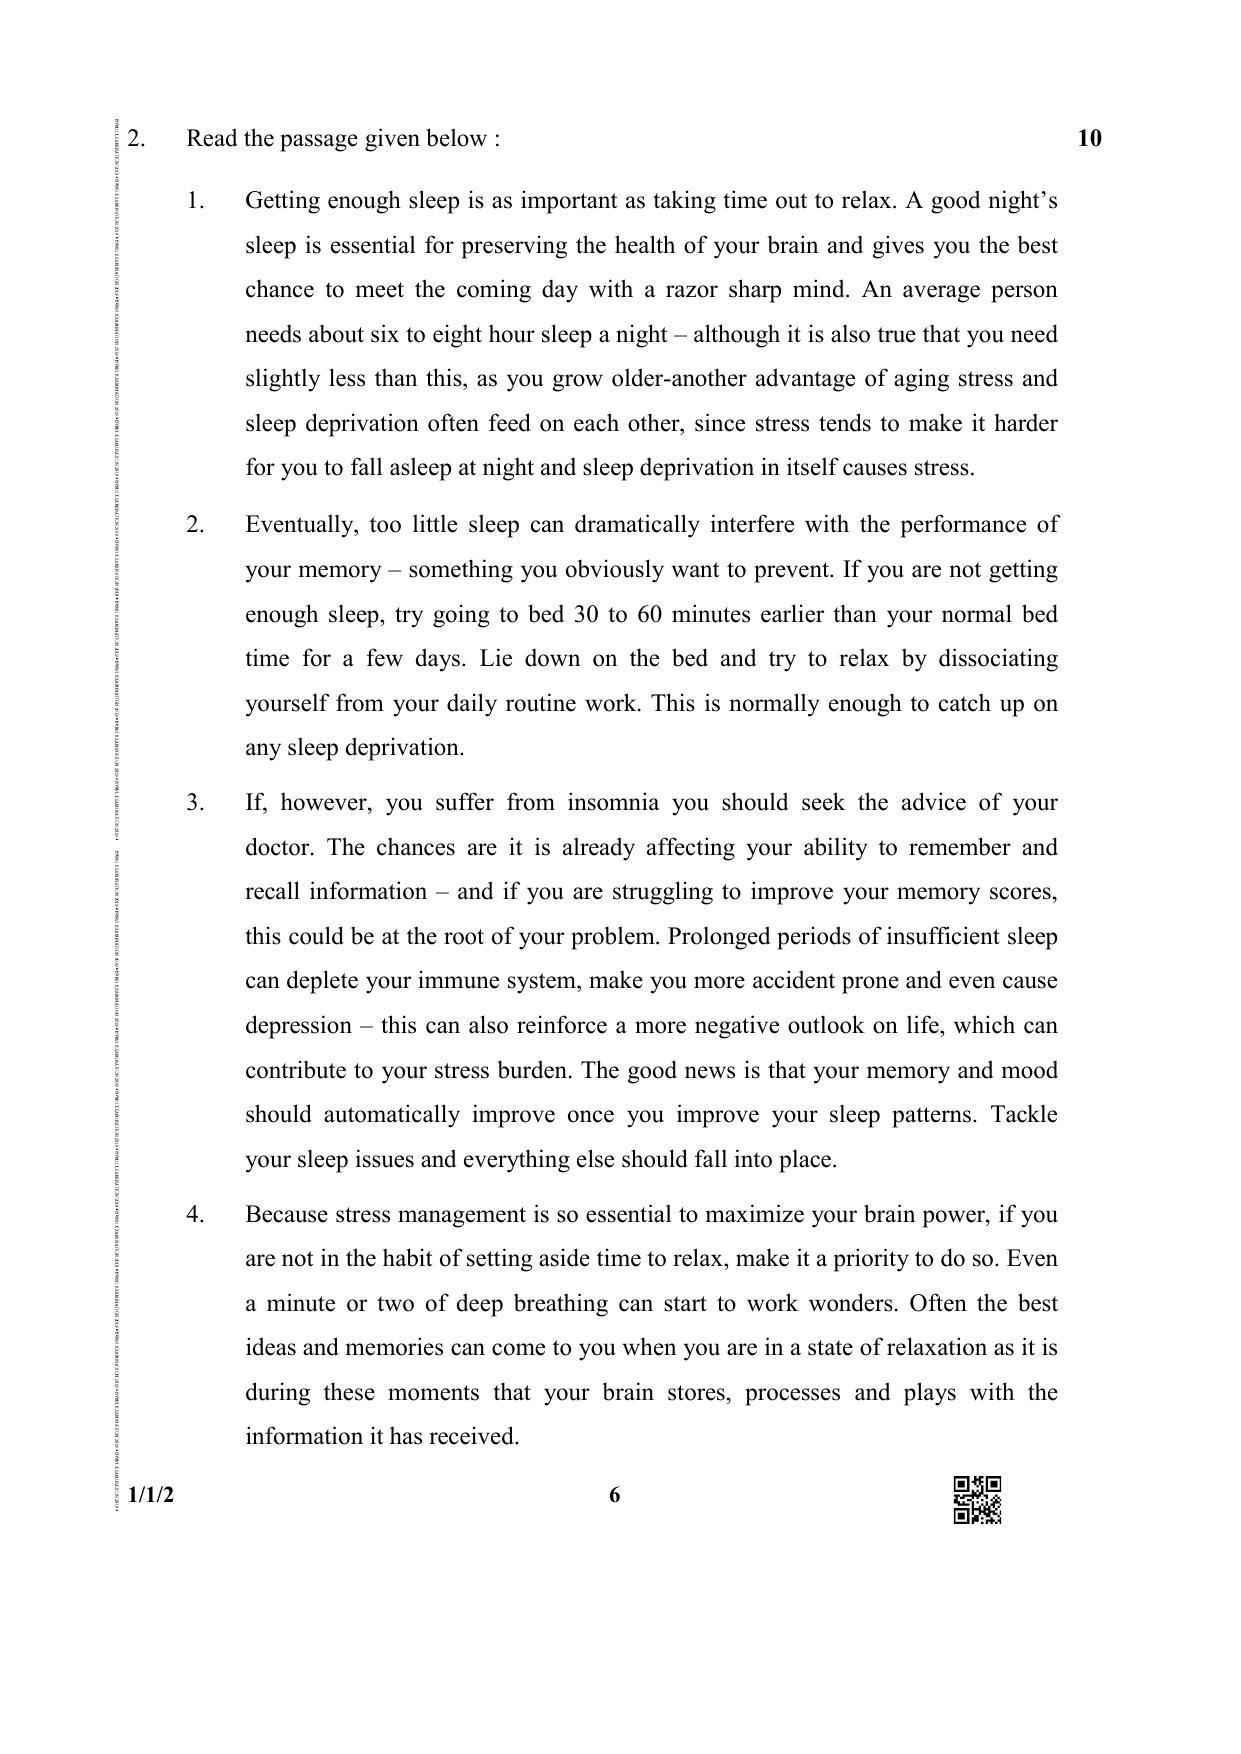 CBSE Class 12 1-1-2 (English Core) 2019 Question Paper - Page 6